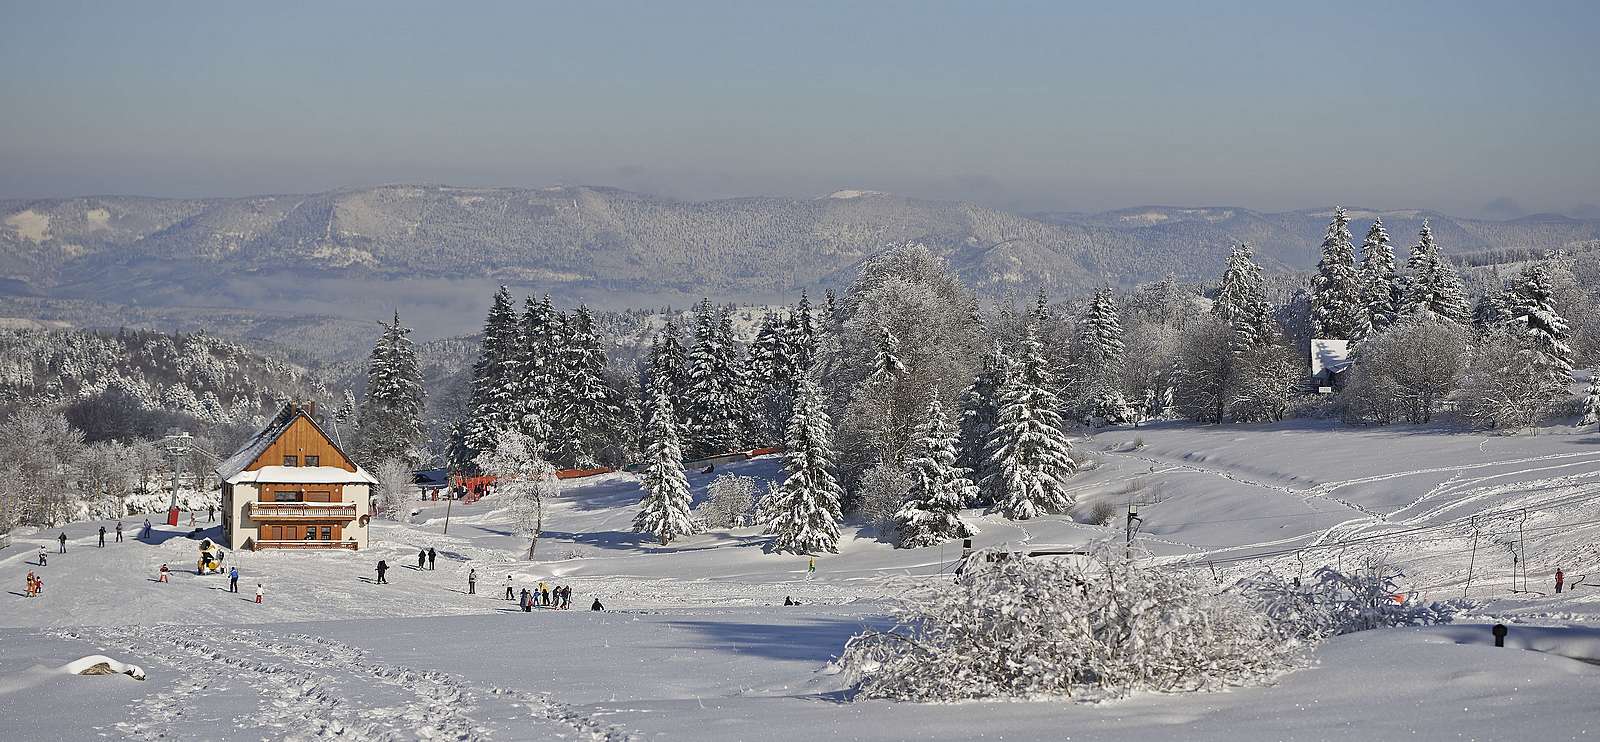 A winter sceneries